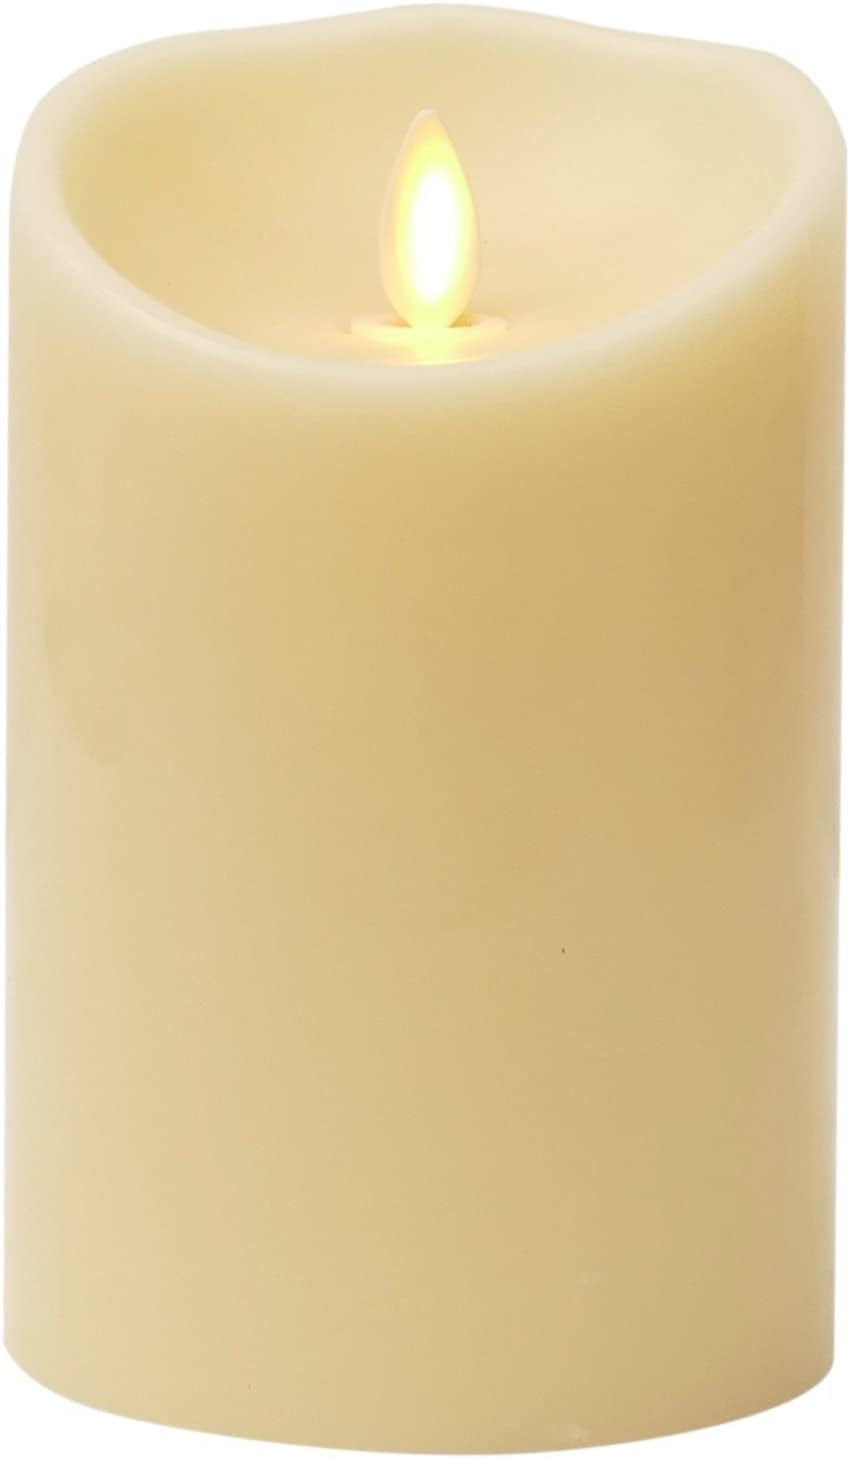 Luminara, Luminara Flameless Candle: Unscented Moving Flame Candle with Timer (5 Ivory)